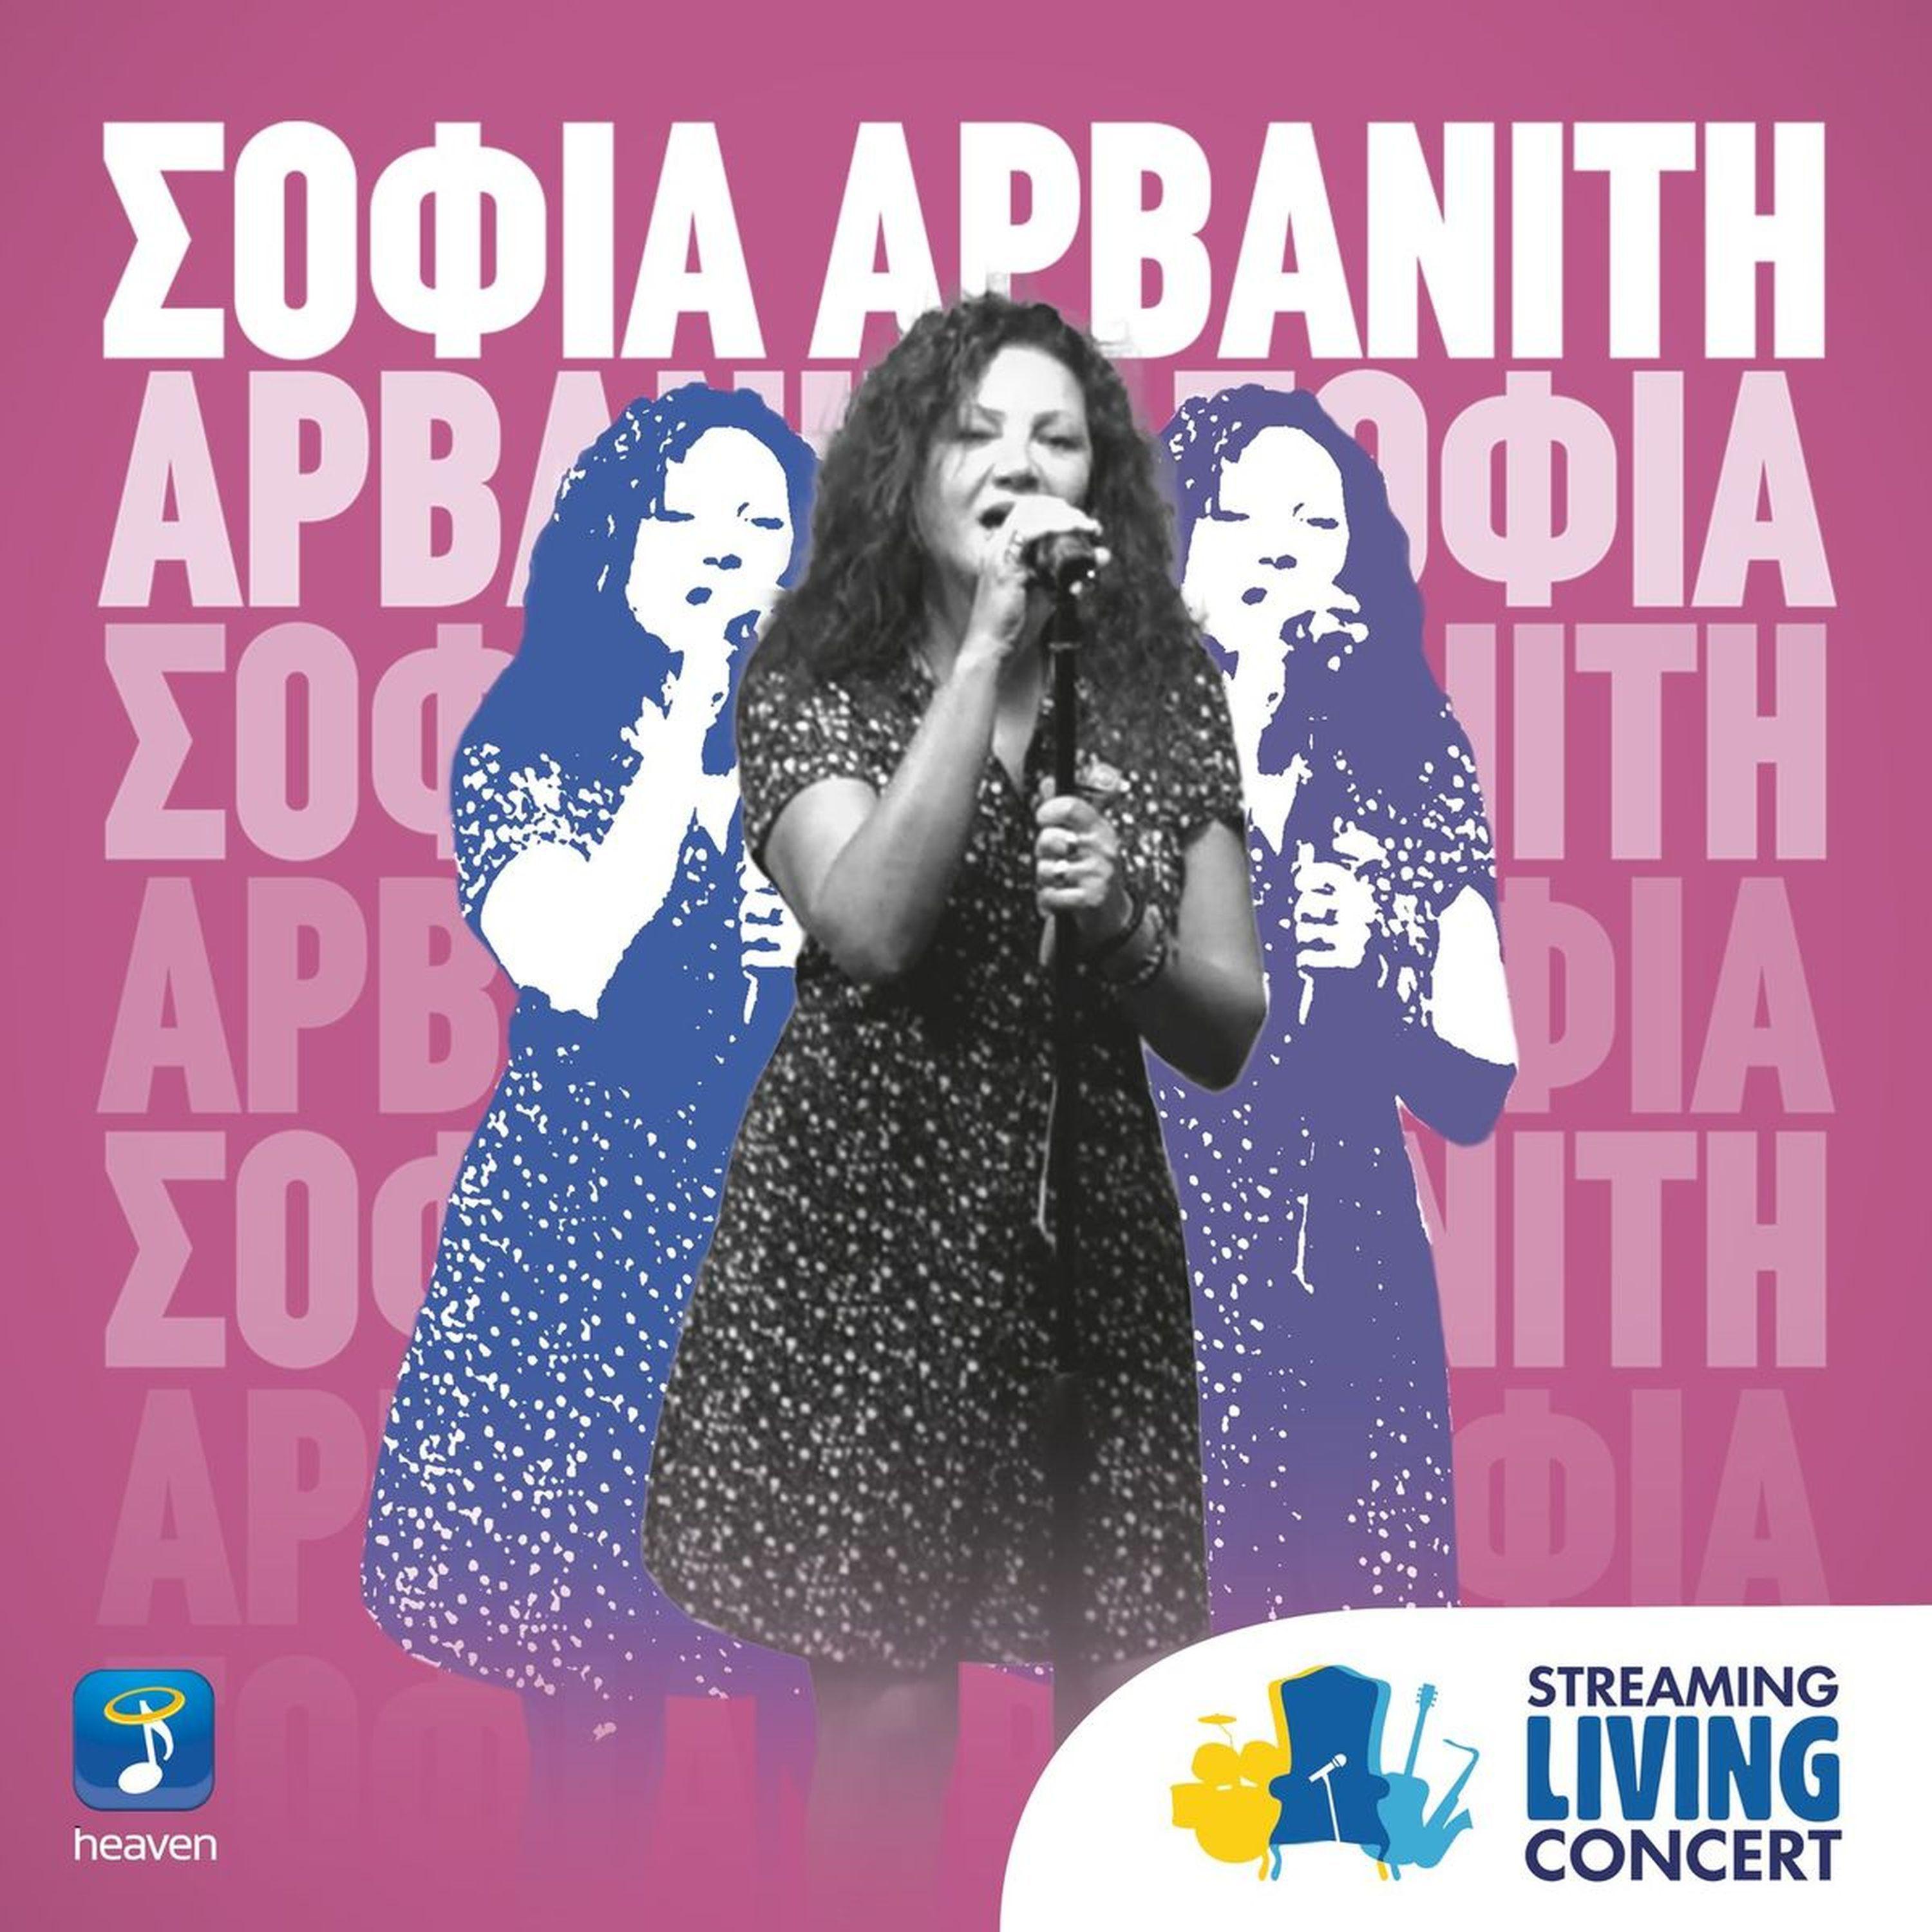 Sofia Arvaniti - Xilino Patoma (Streaming Living Concert)